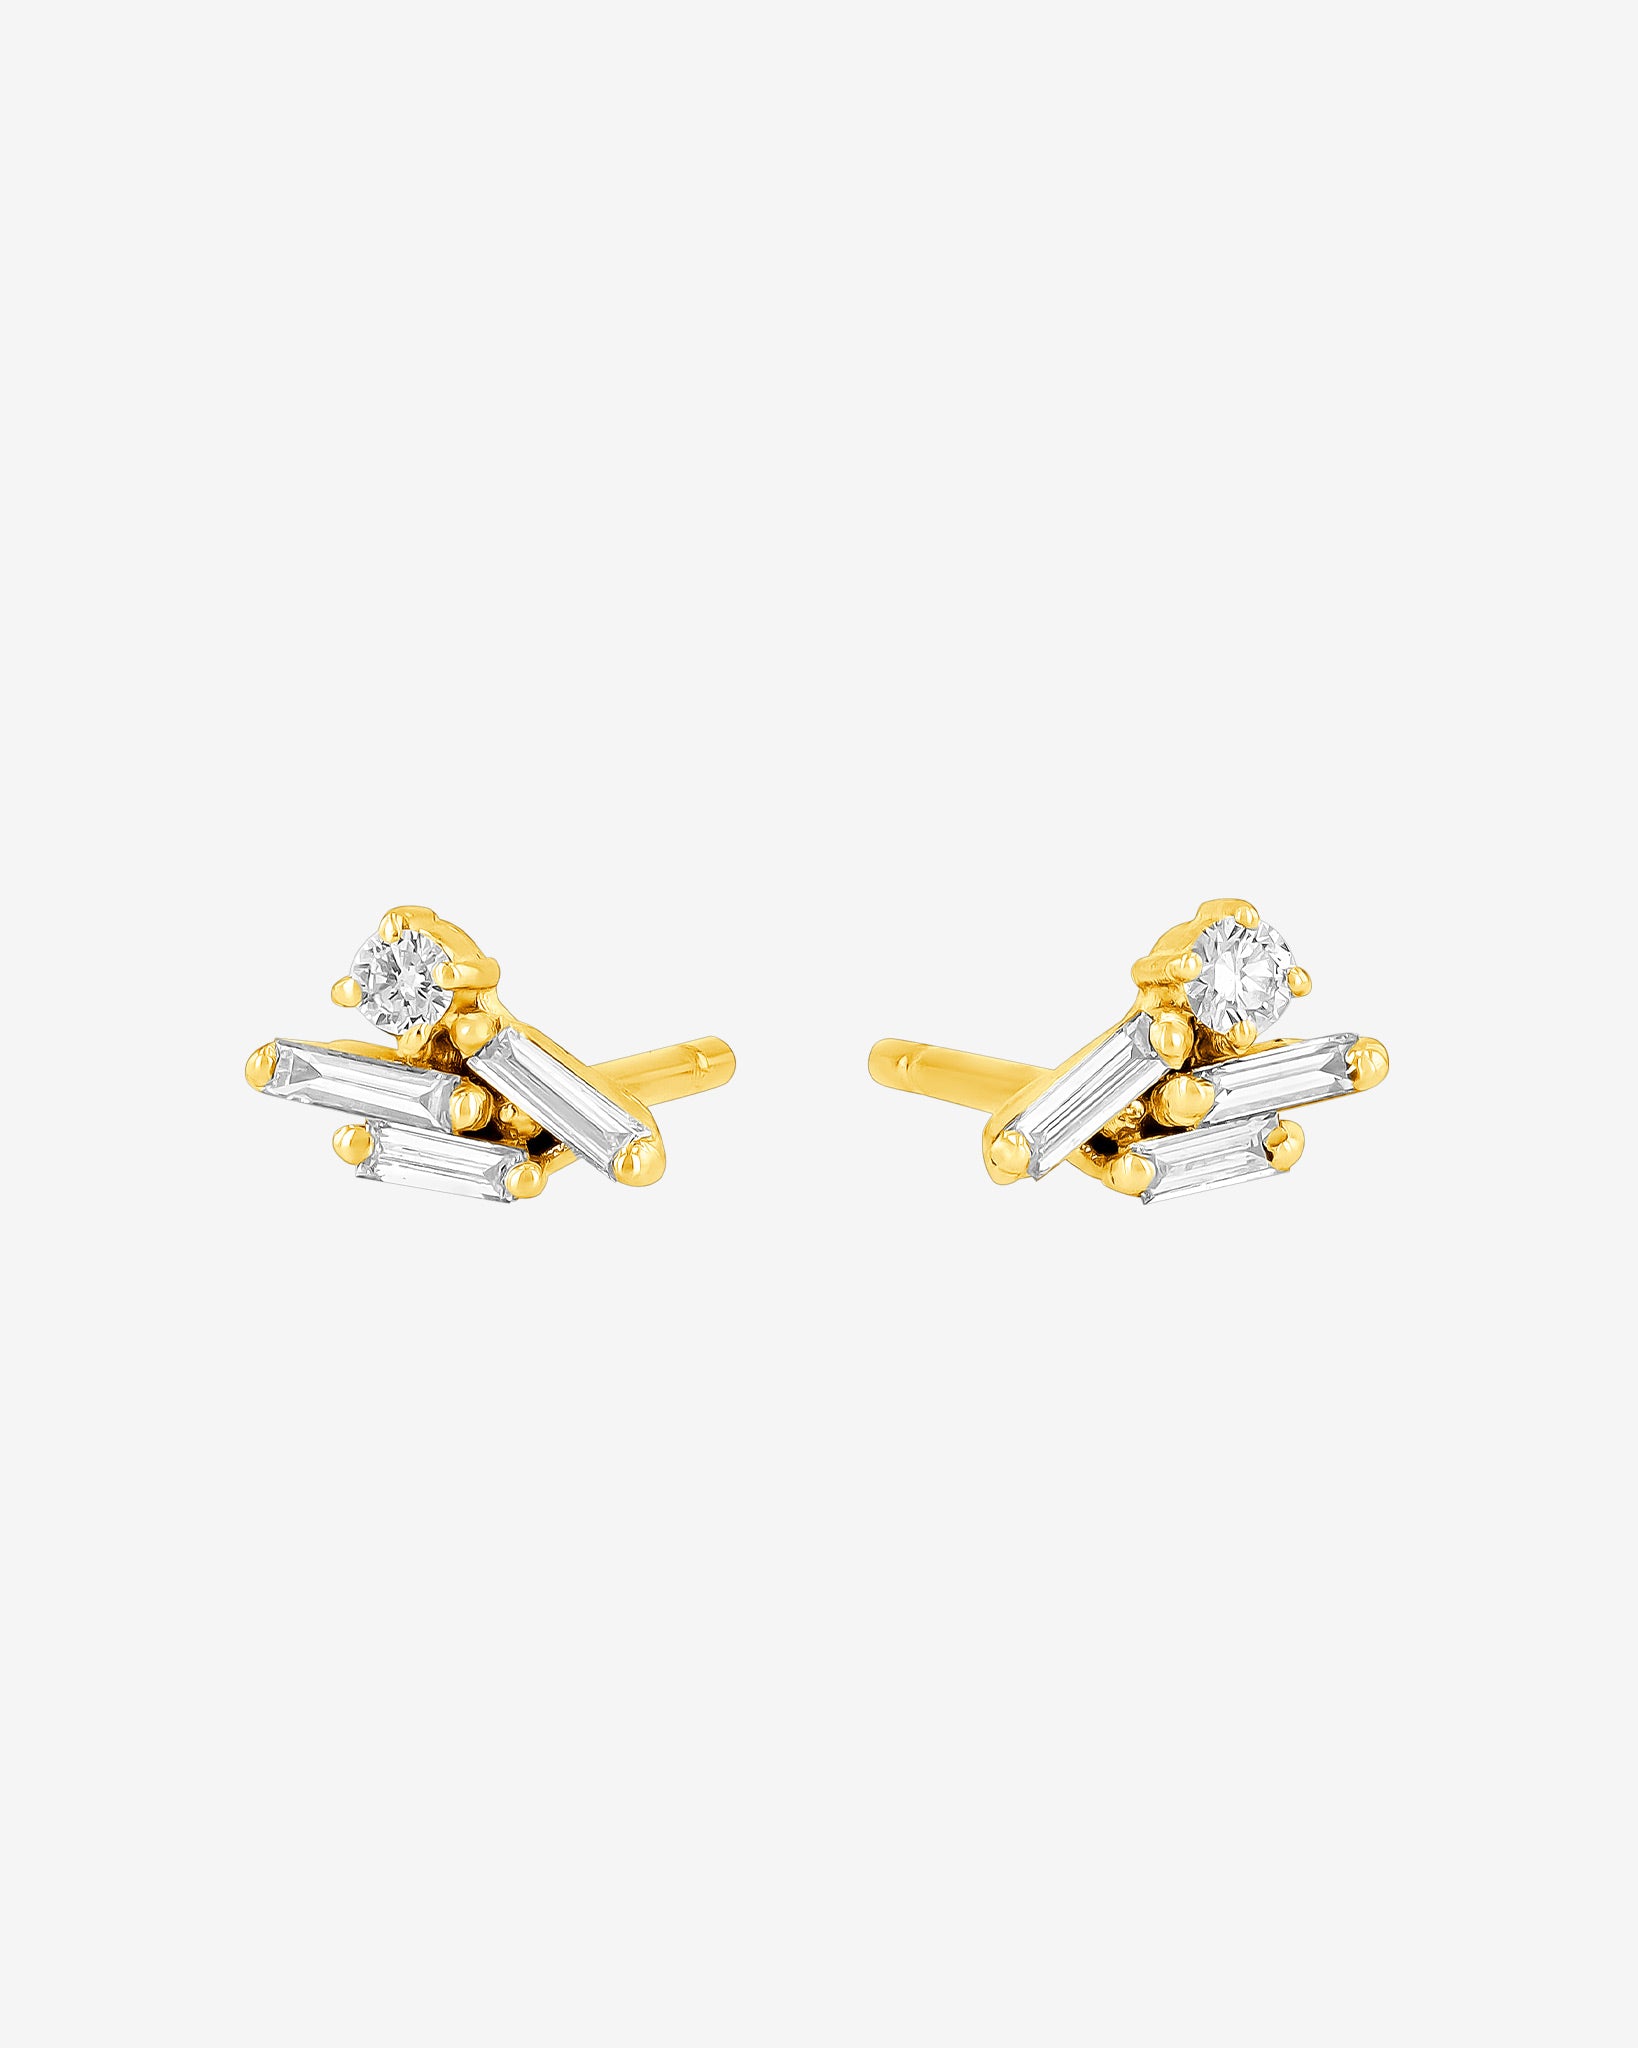 Suzanne Kalan Eva White Diamond Stud Earrings in 18k yellow gold